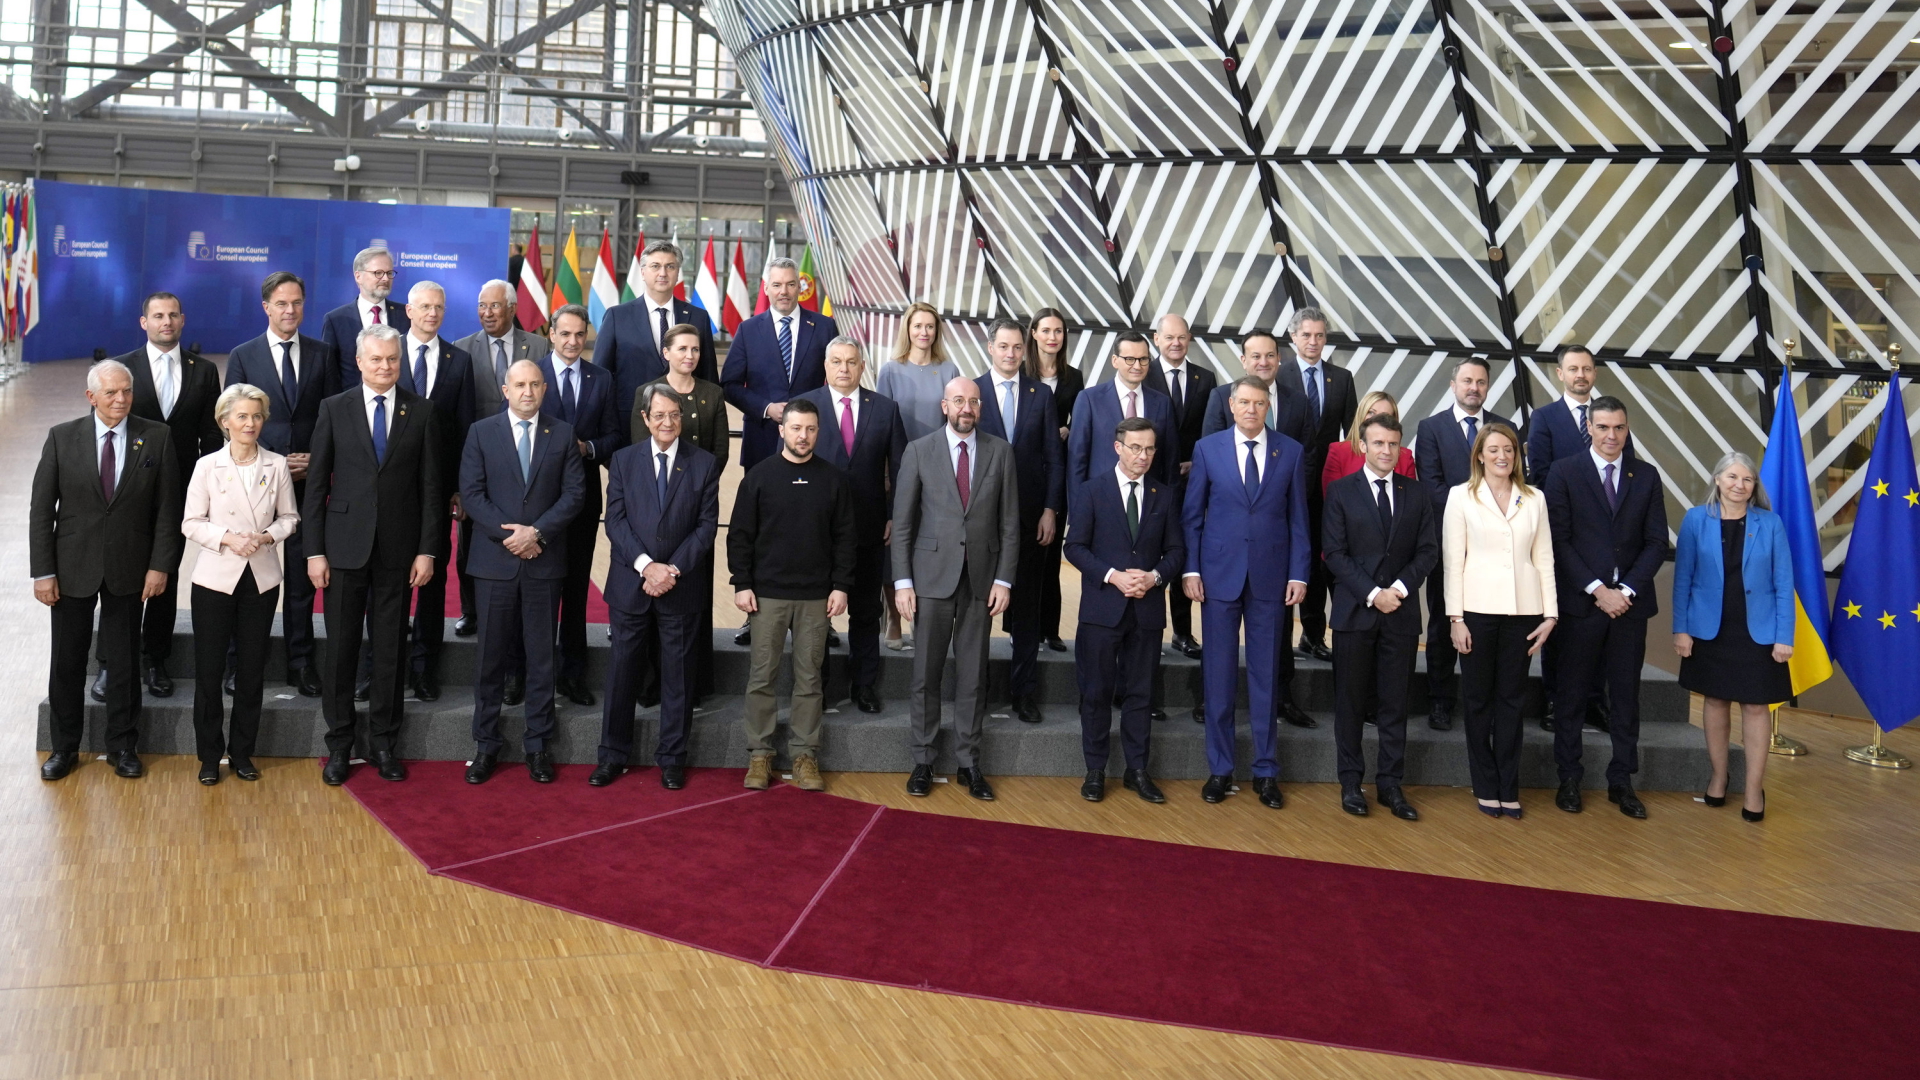 Gruppenbild der Teilnehmer des EU-Gipfels